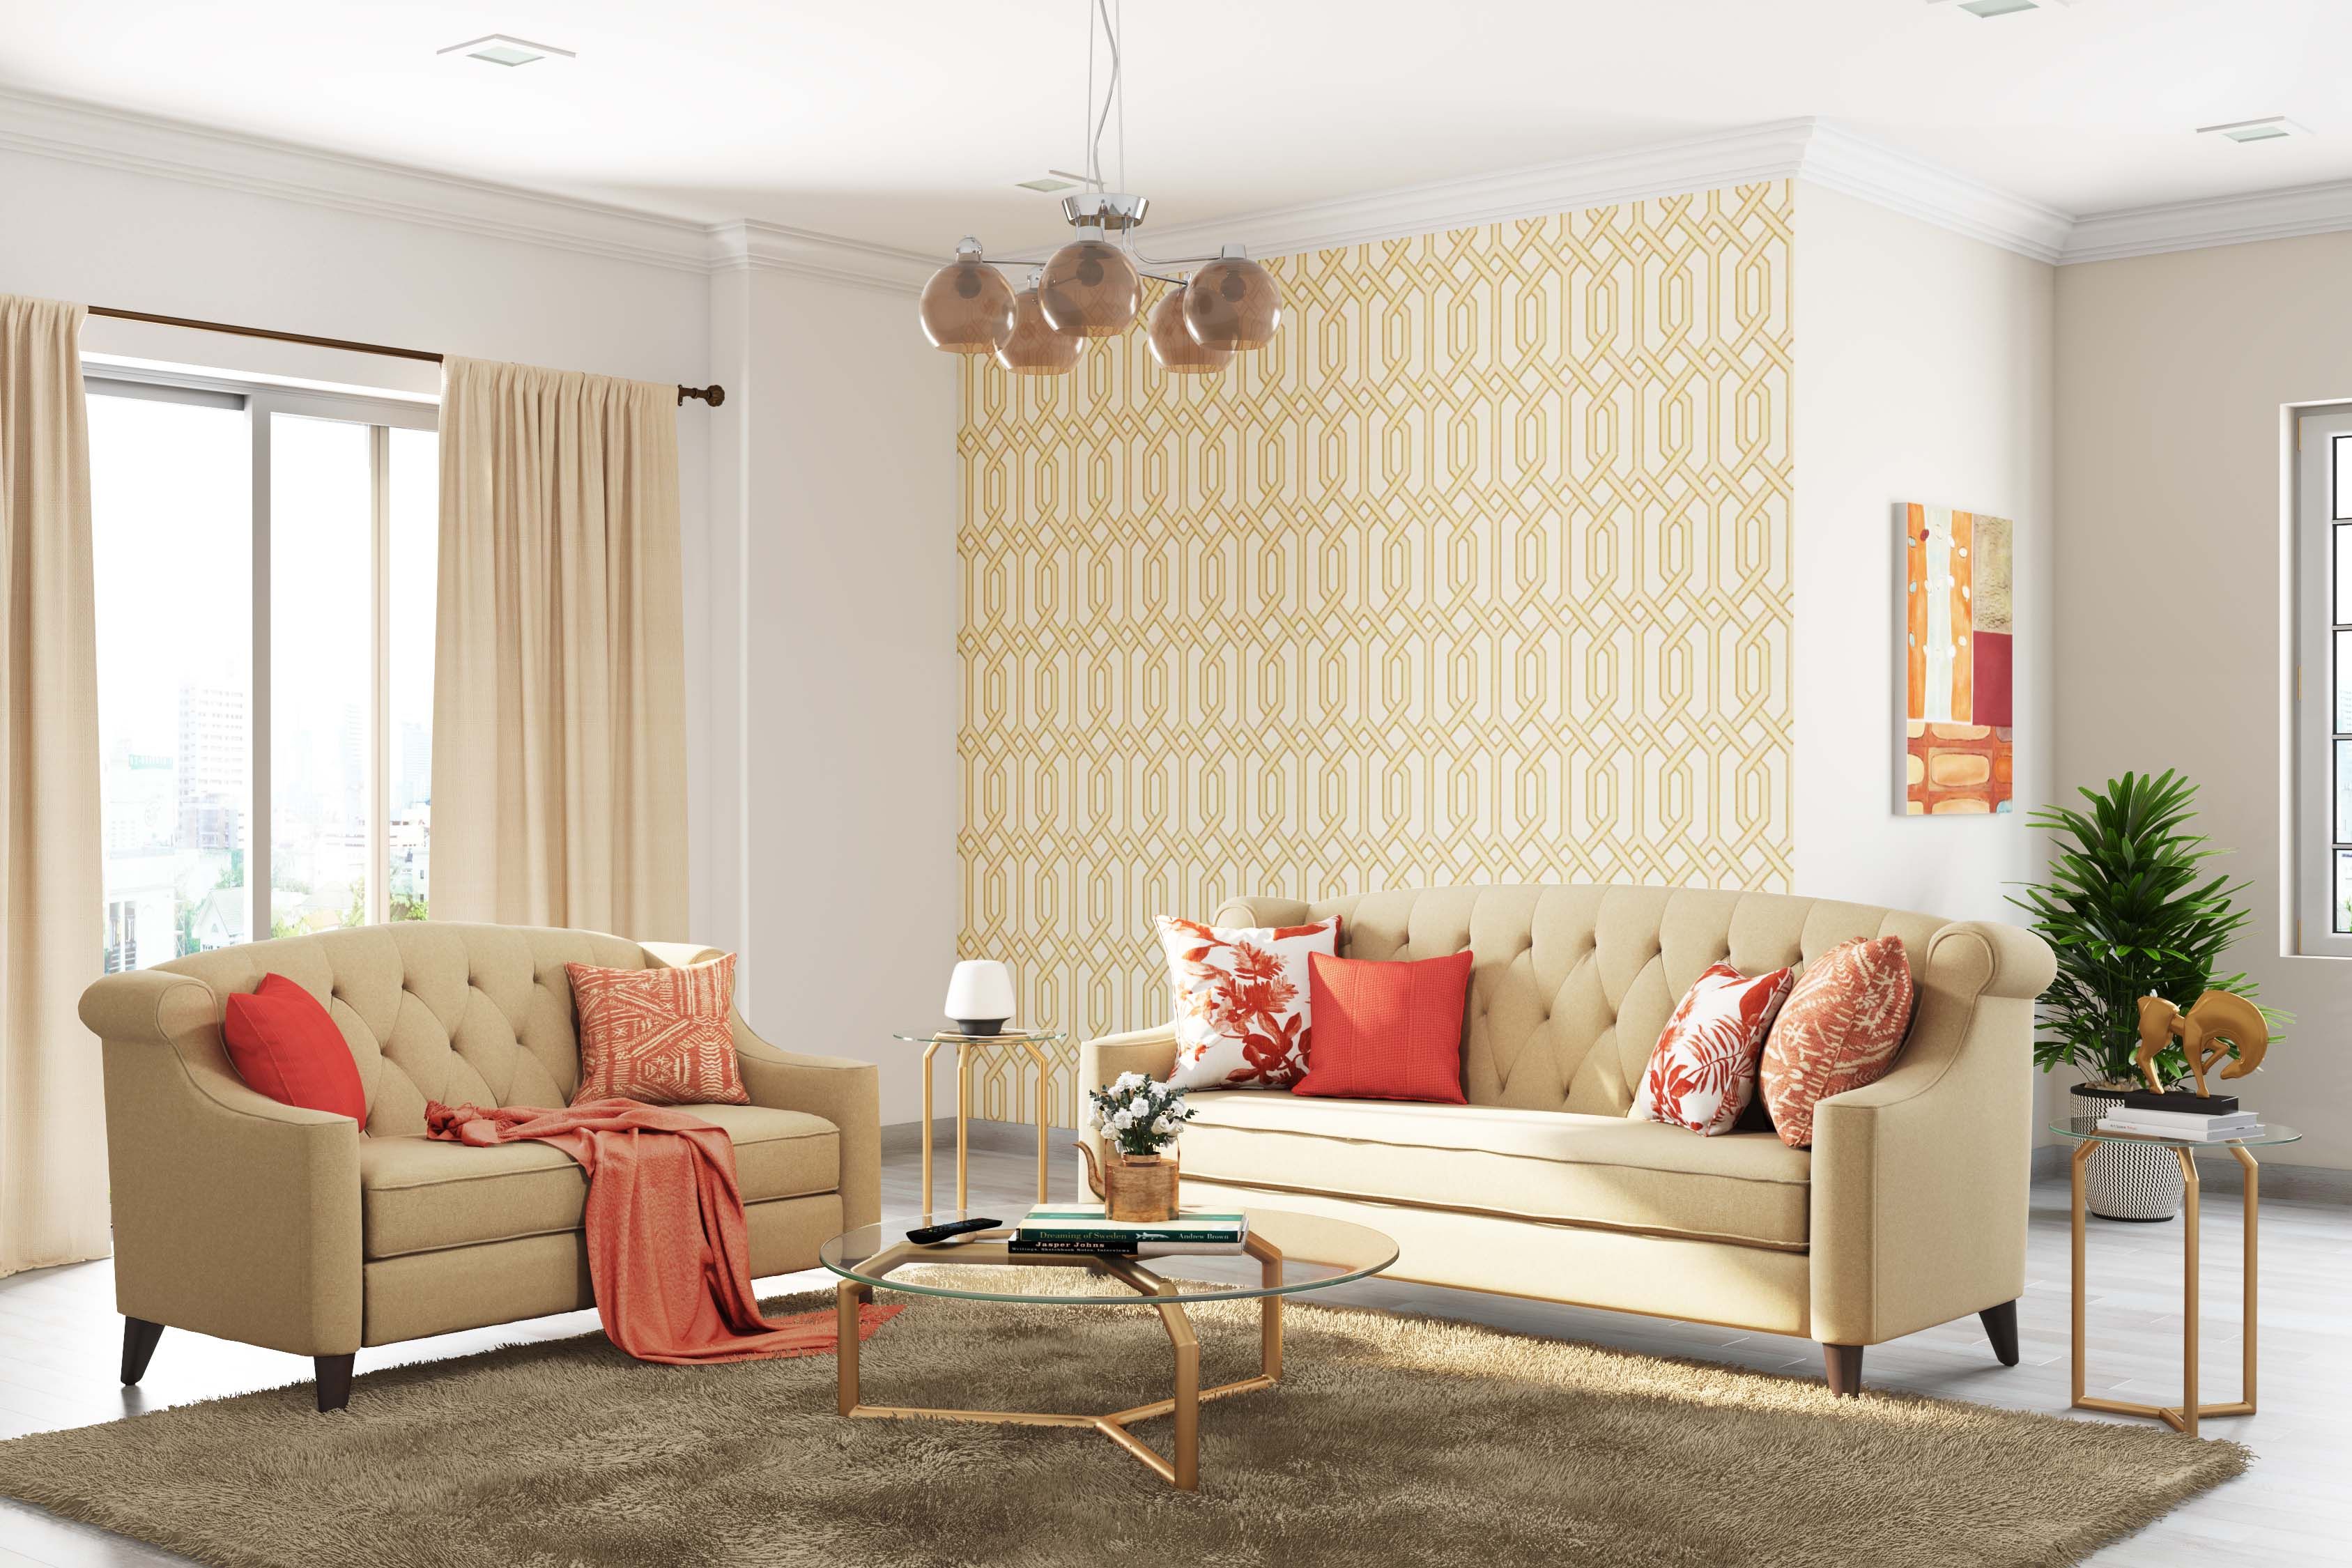 Modern Beige And White Patterned Wallpaper Design For Living Room